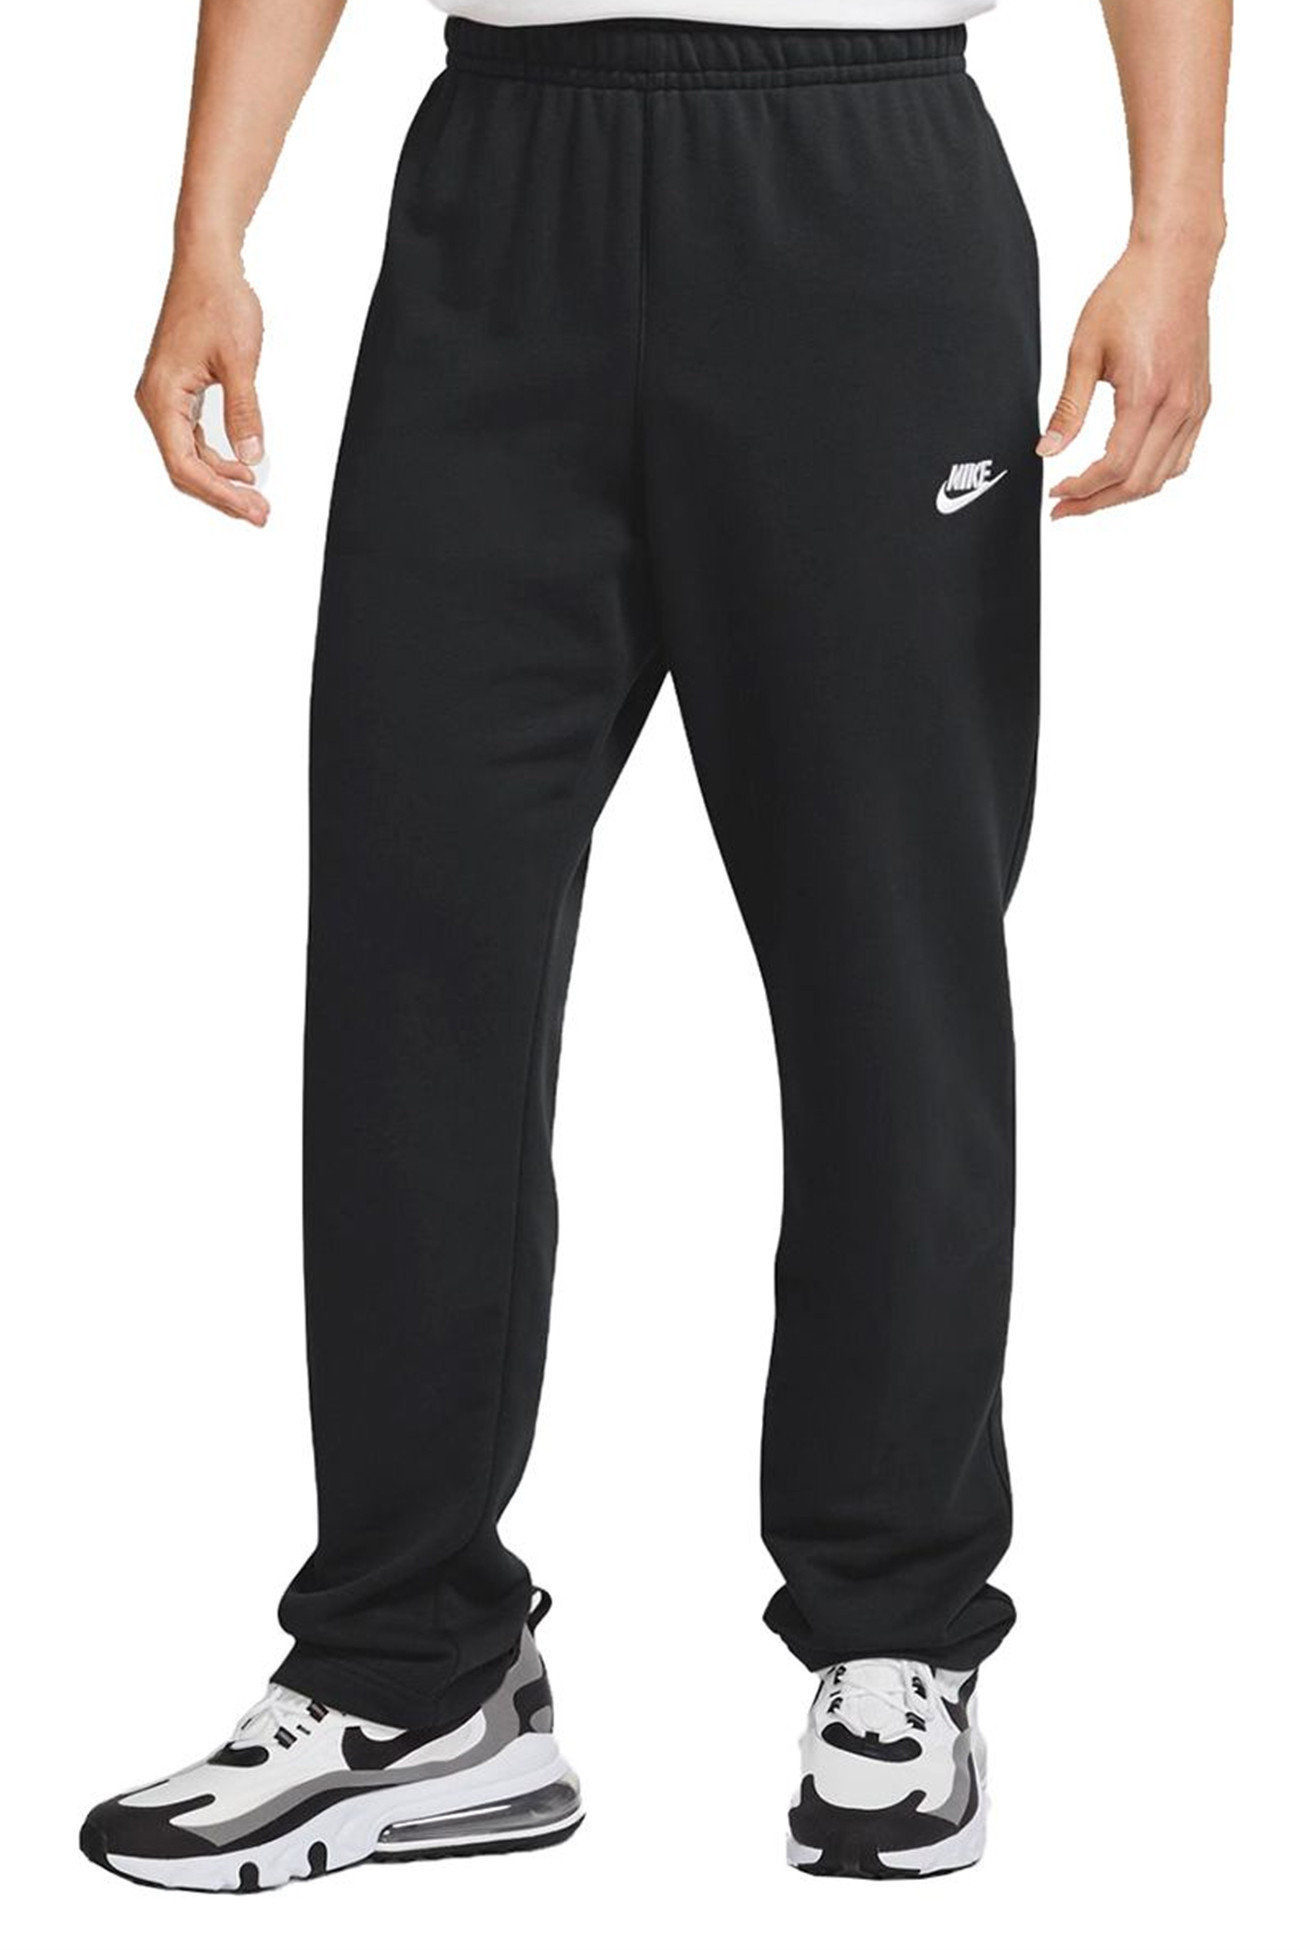 Брюки мужские Nike Sportswear Club черные BV2713-010